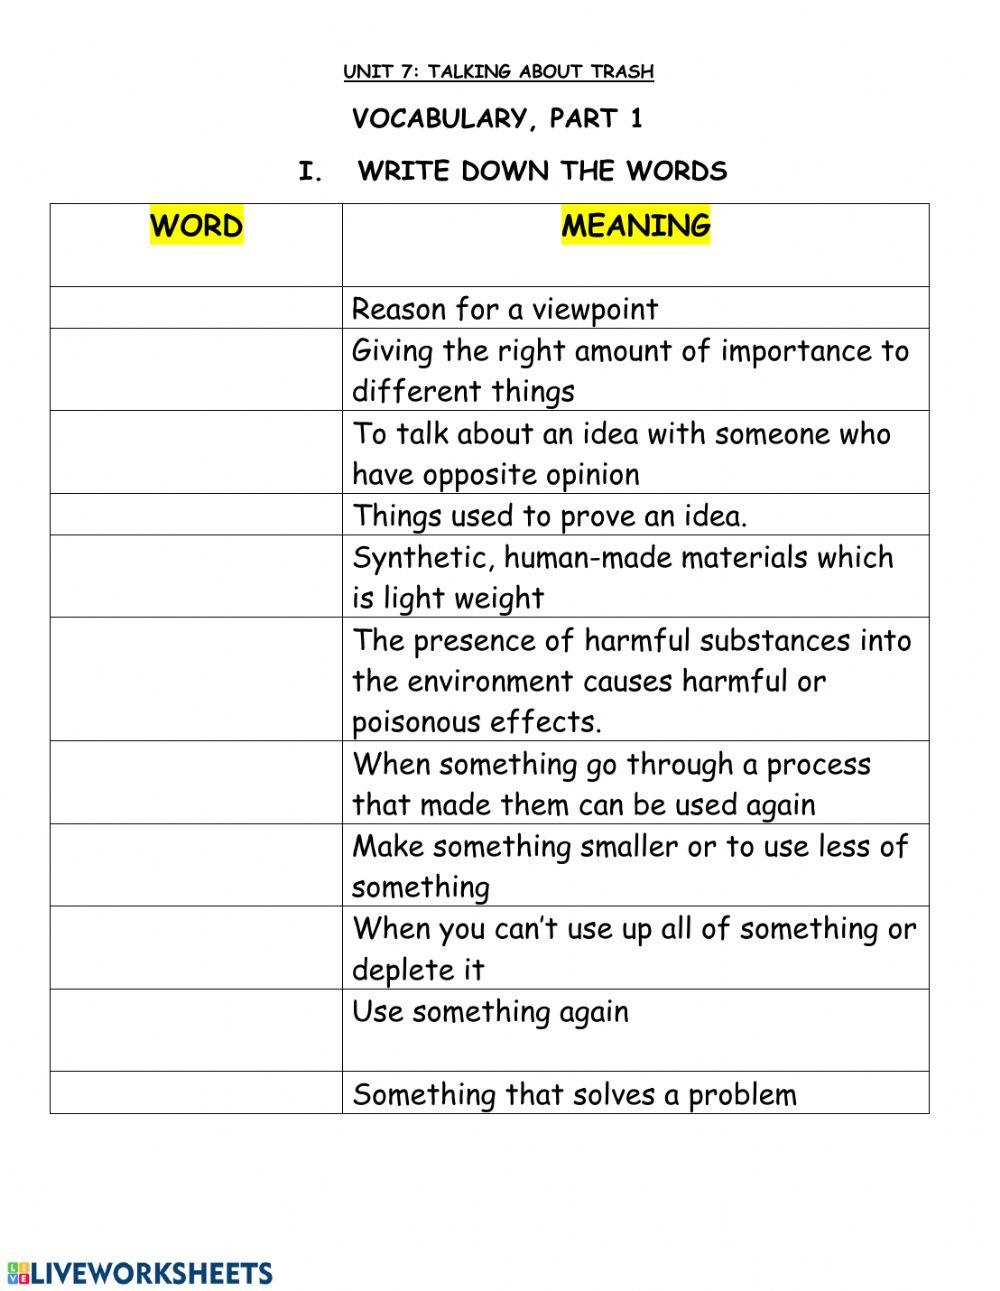 Vocabulary Unit 7 Part 1: Talking About Trash